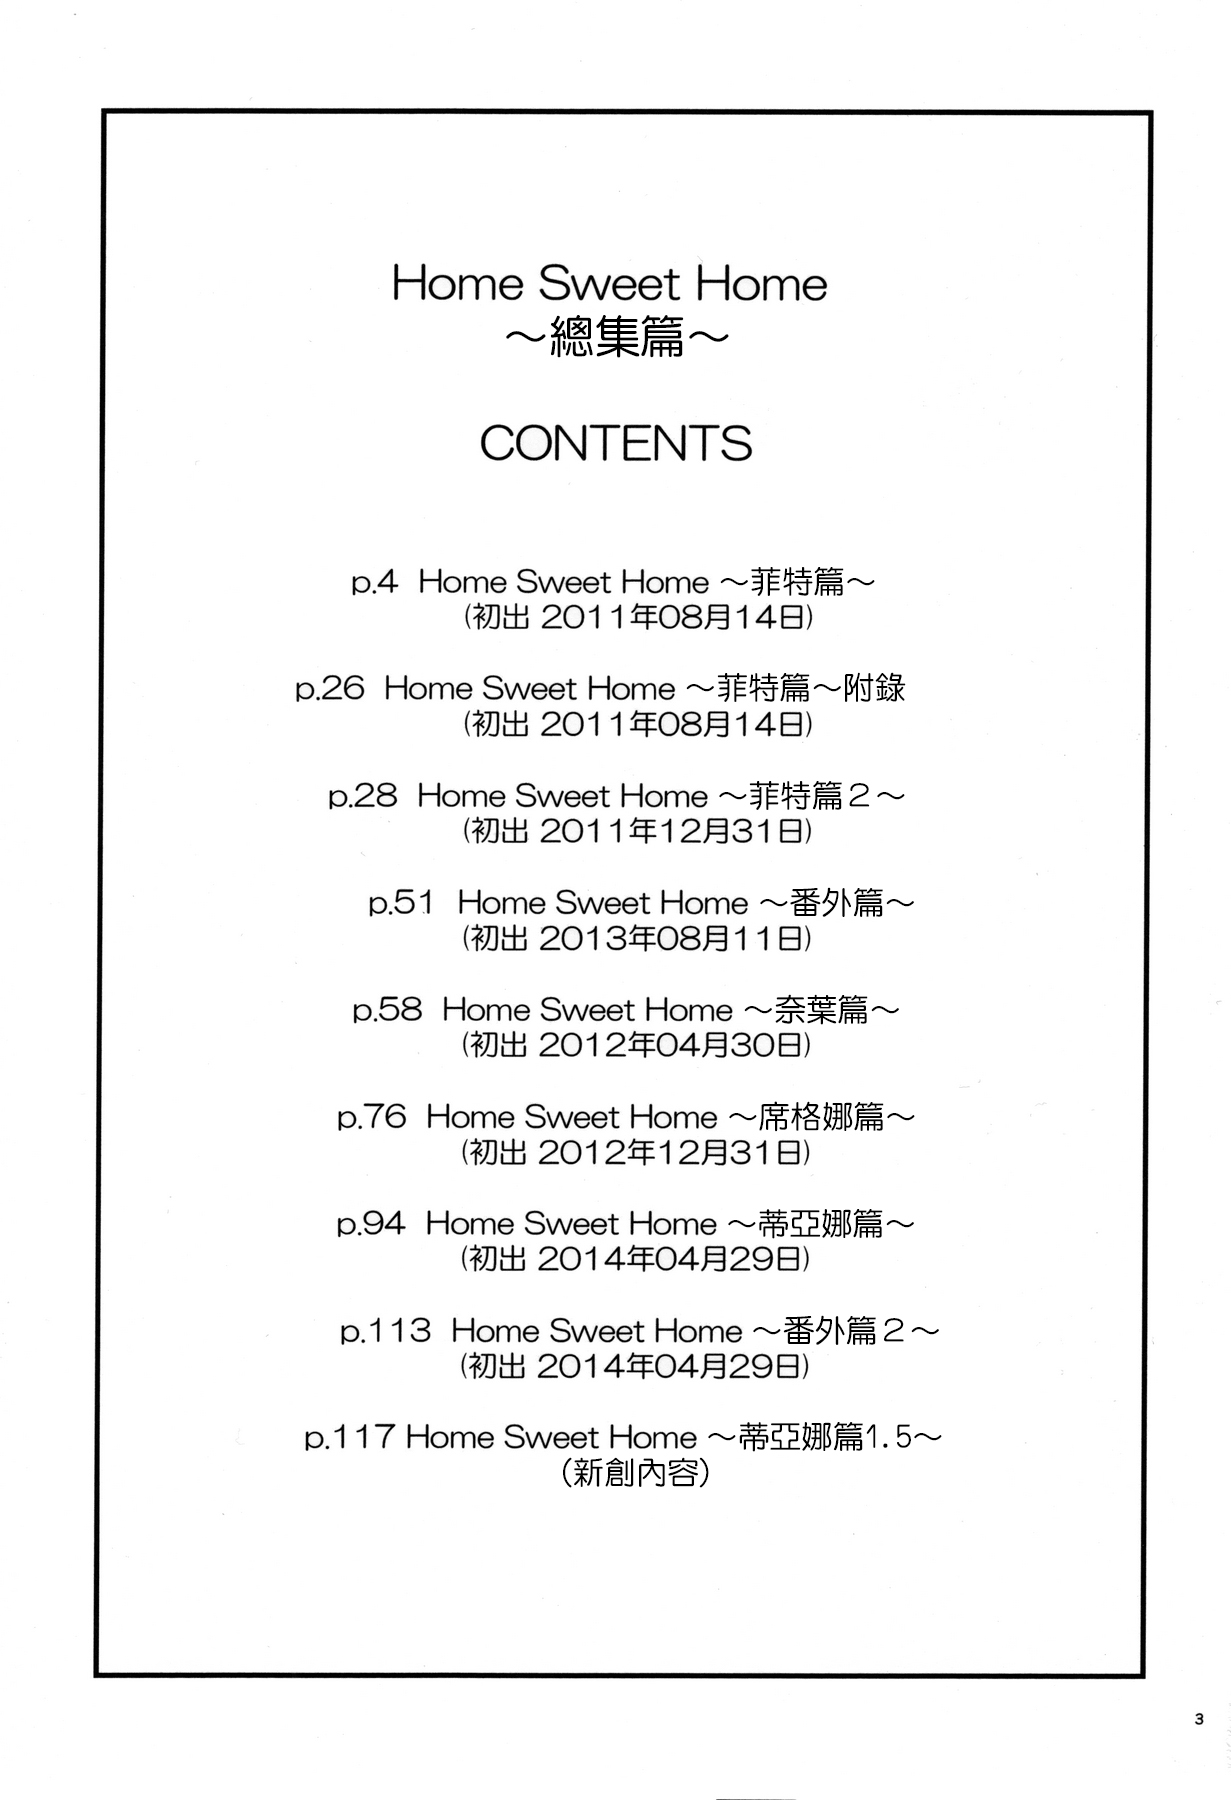 (C88) [IV VA SHIN (みくに瑞貴)] Home Sweet Home ~総集編~ (魔法少女リリカルなのは) [中国翻訳]